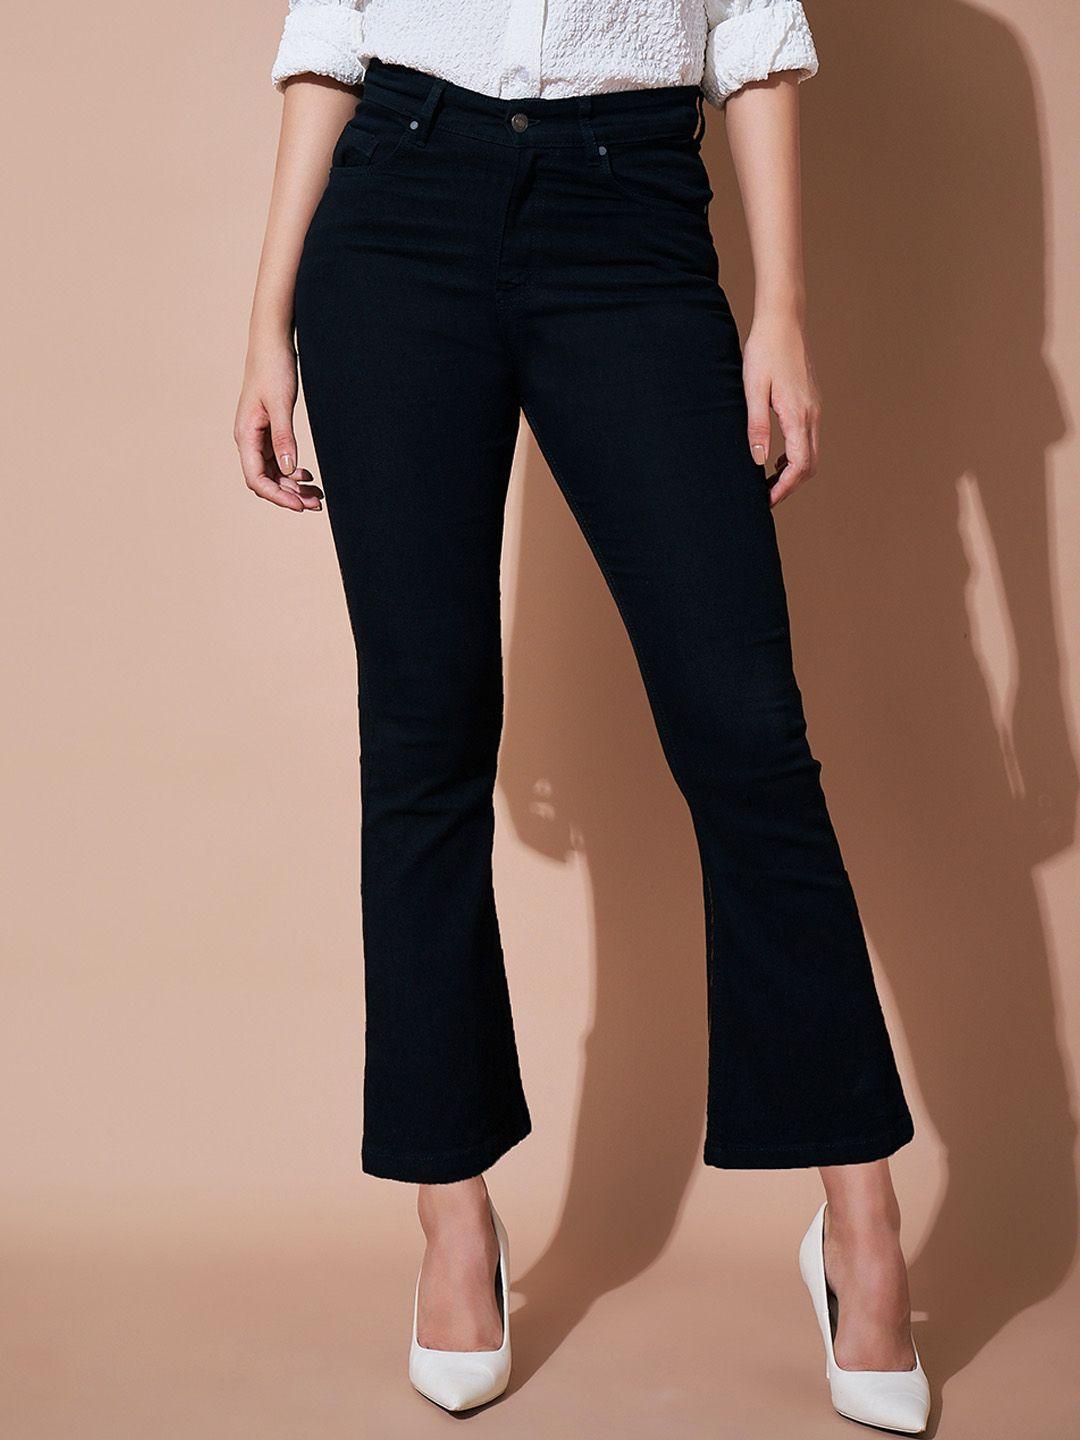 sassafras basics women black bootcut stretchable jeans